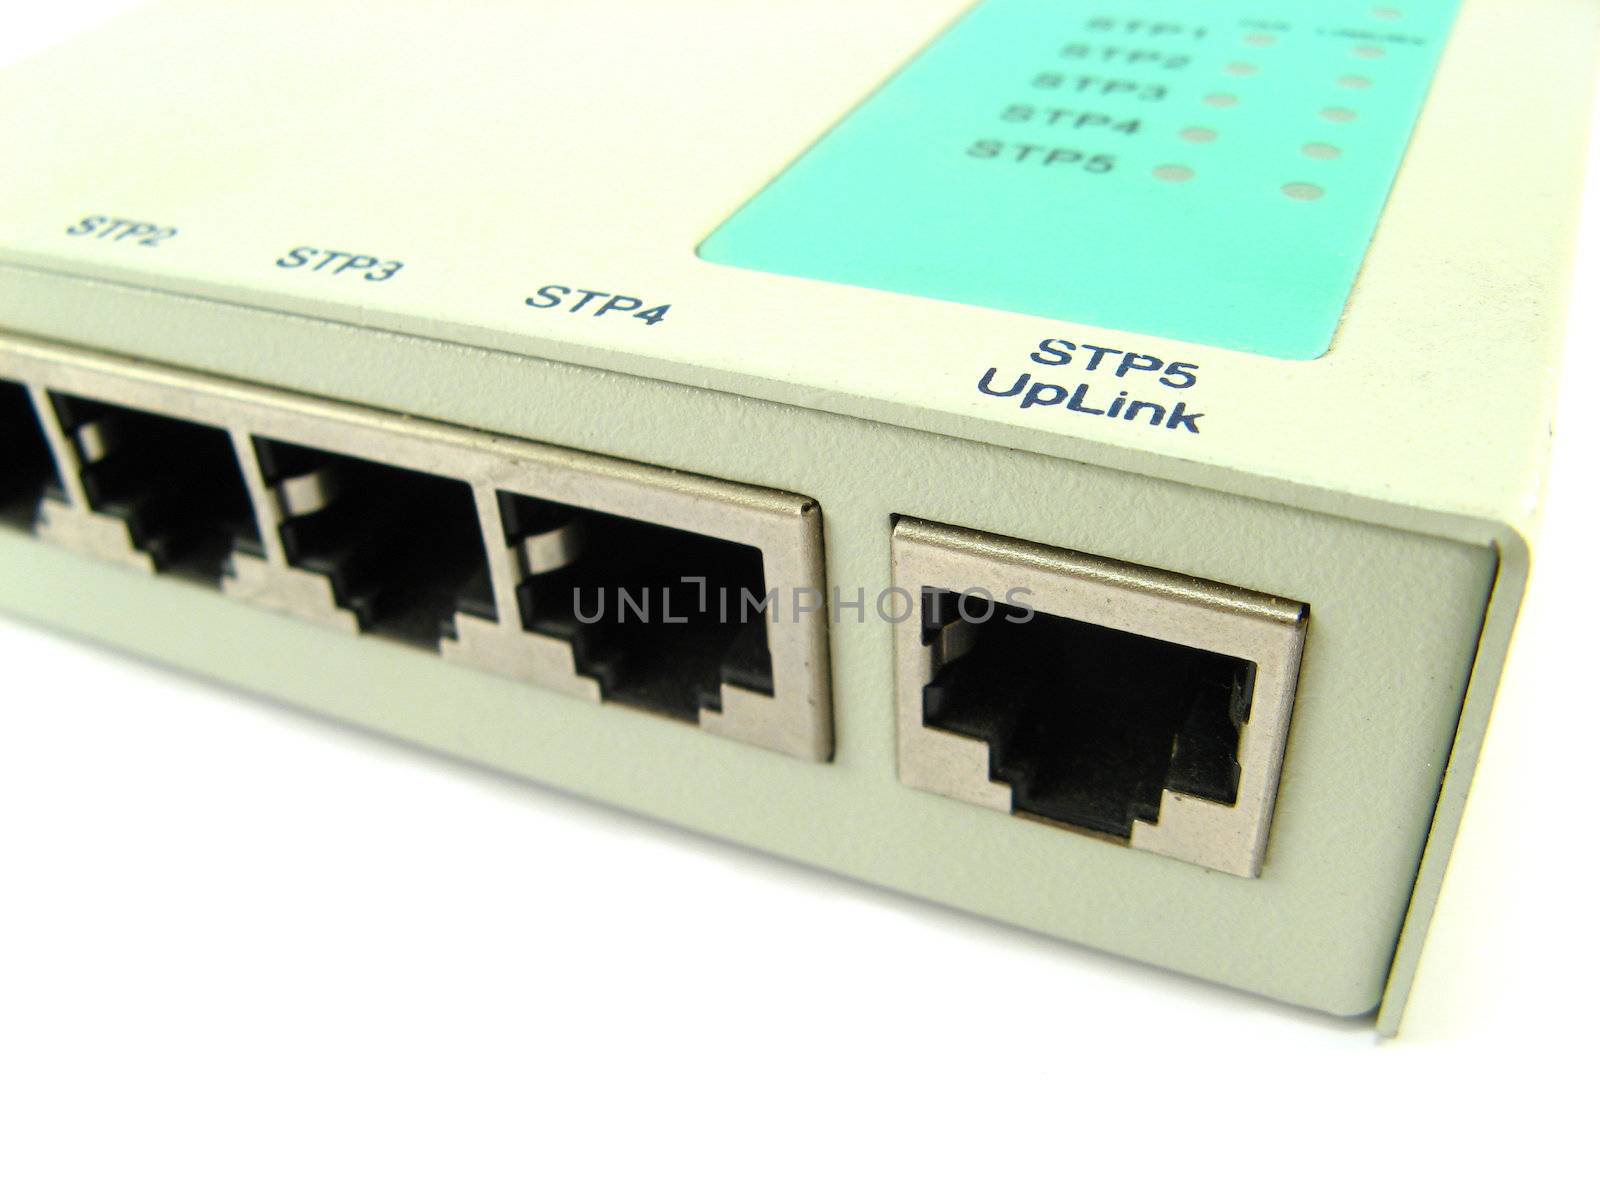 close-up image of a 5 ethernet ports hub